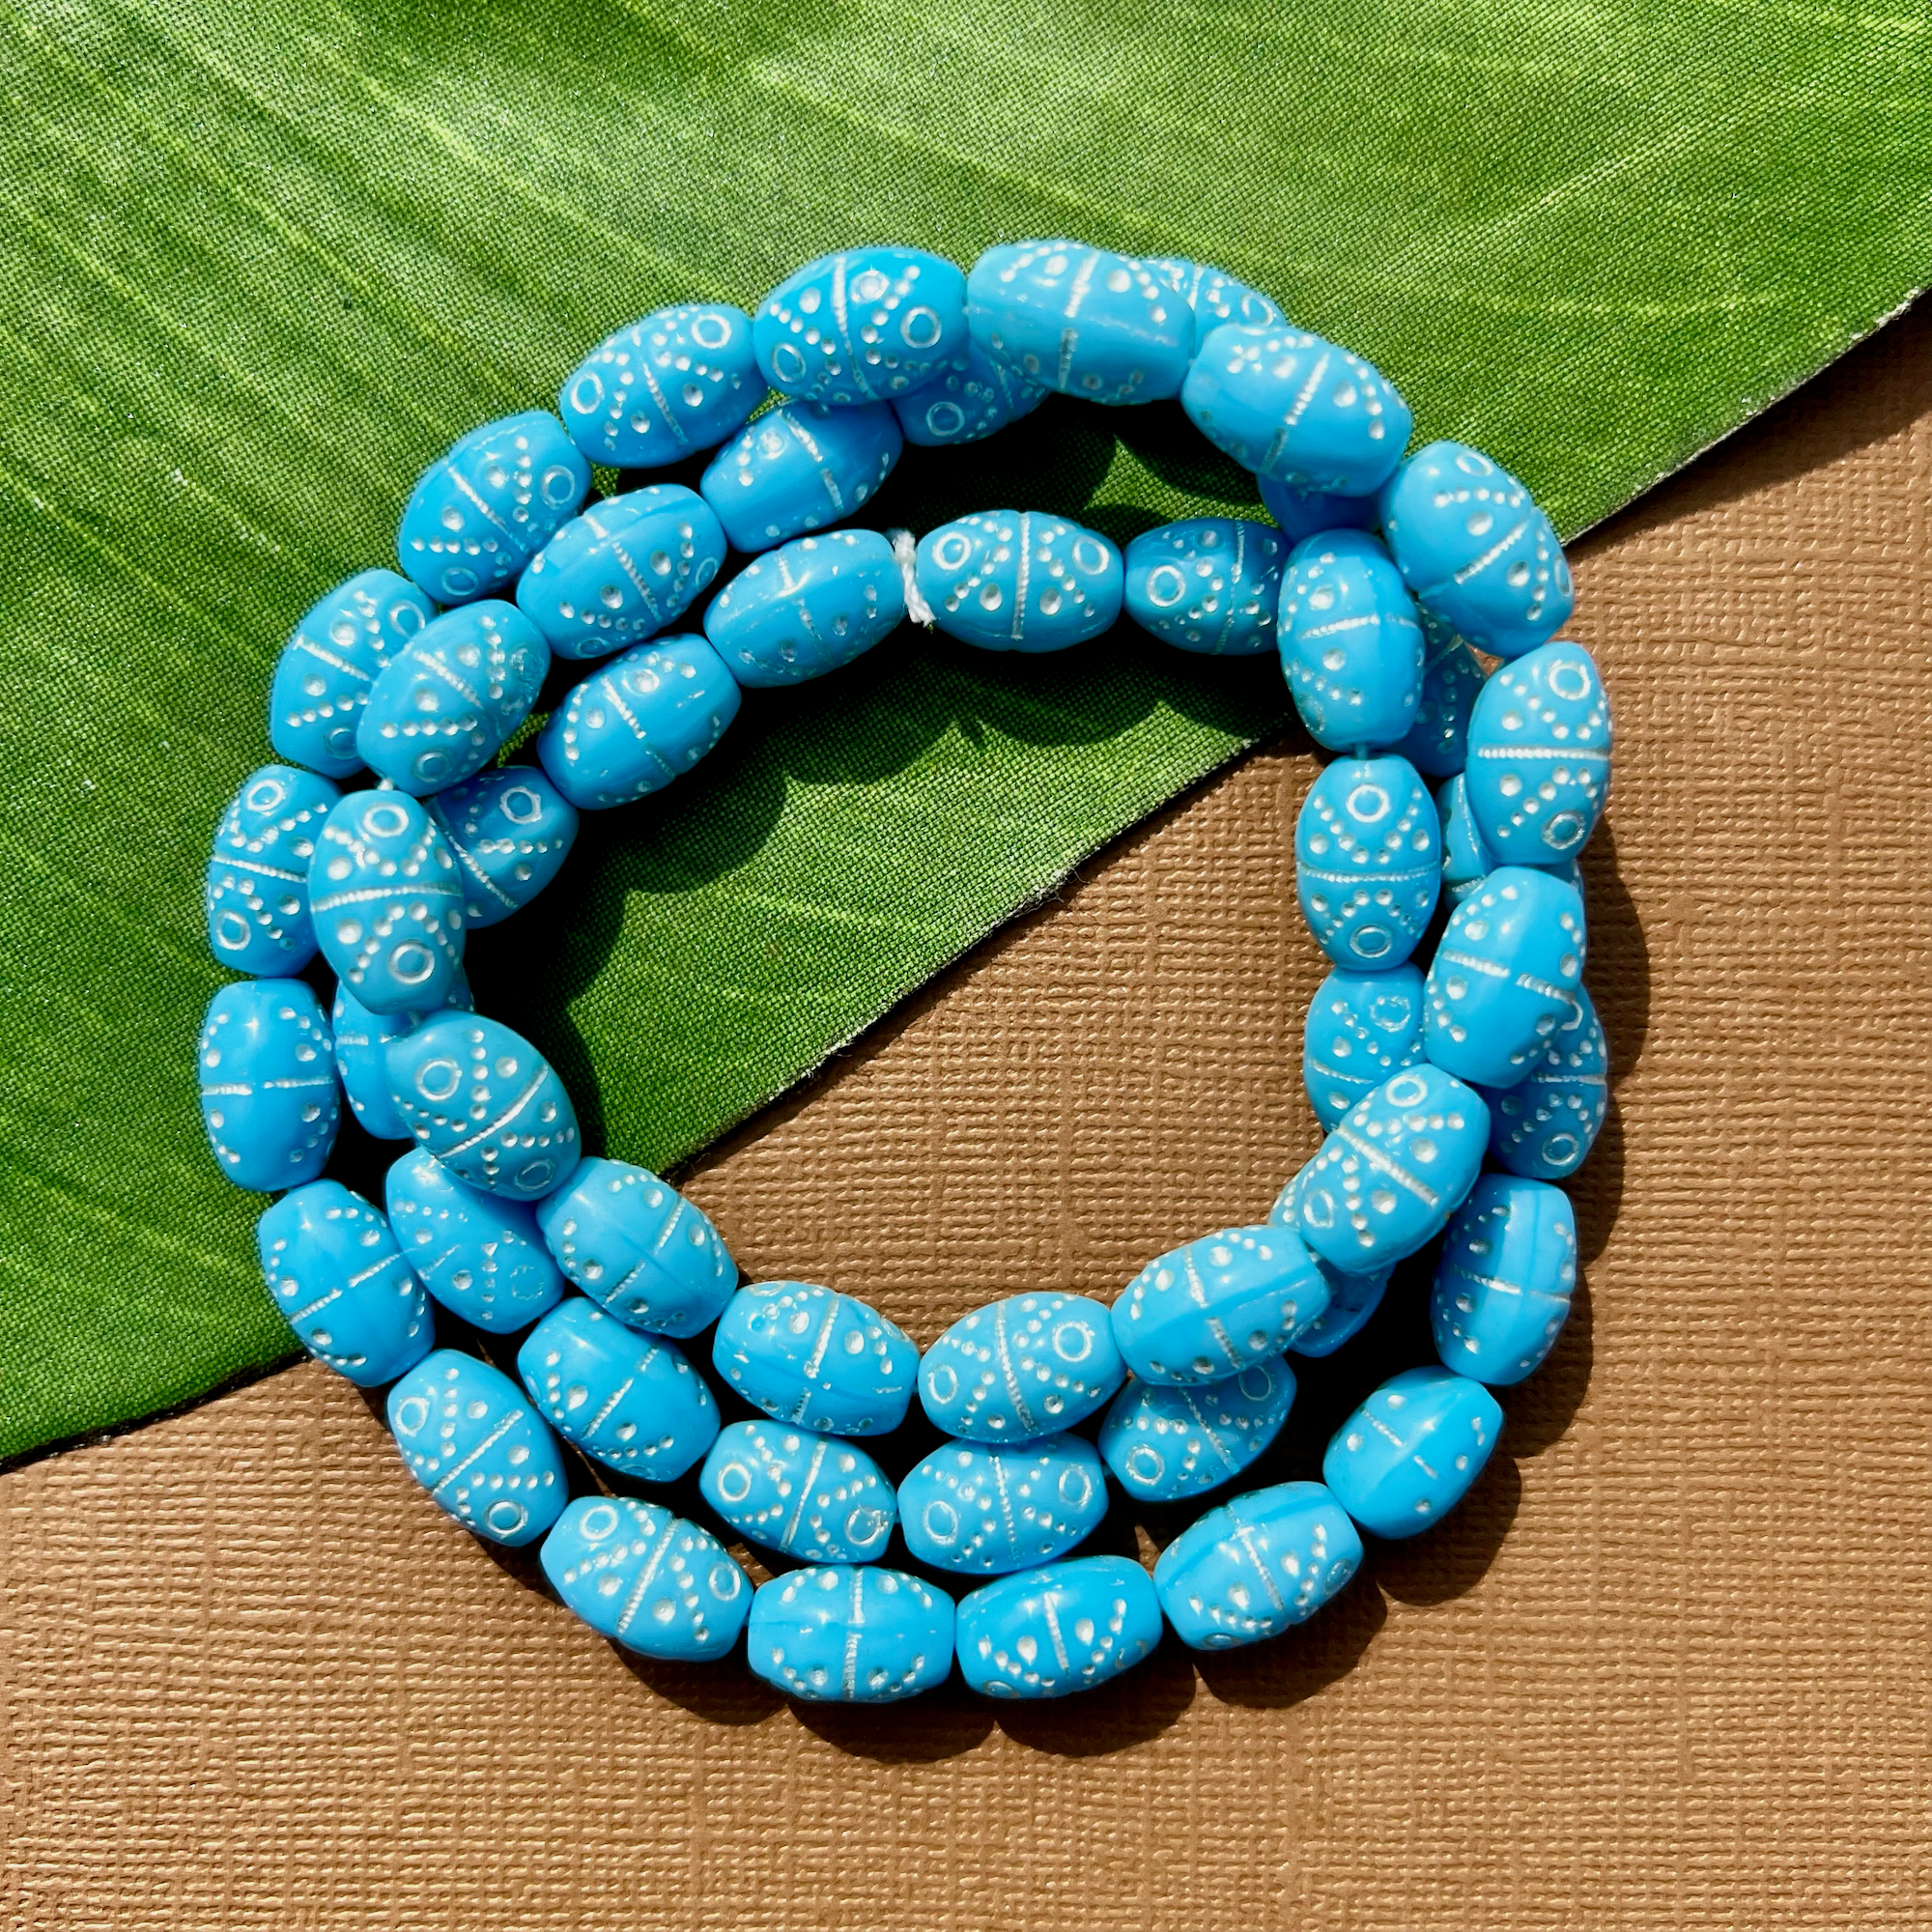 Blue Decorative Oval Beads - 50 Pieces